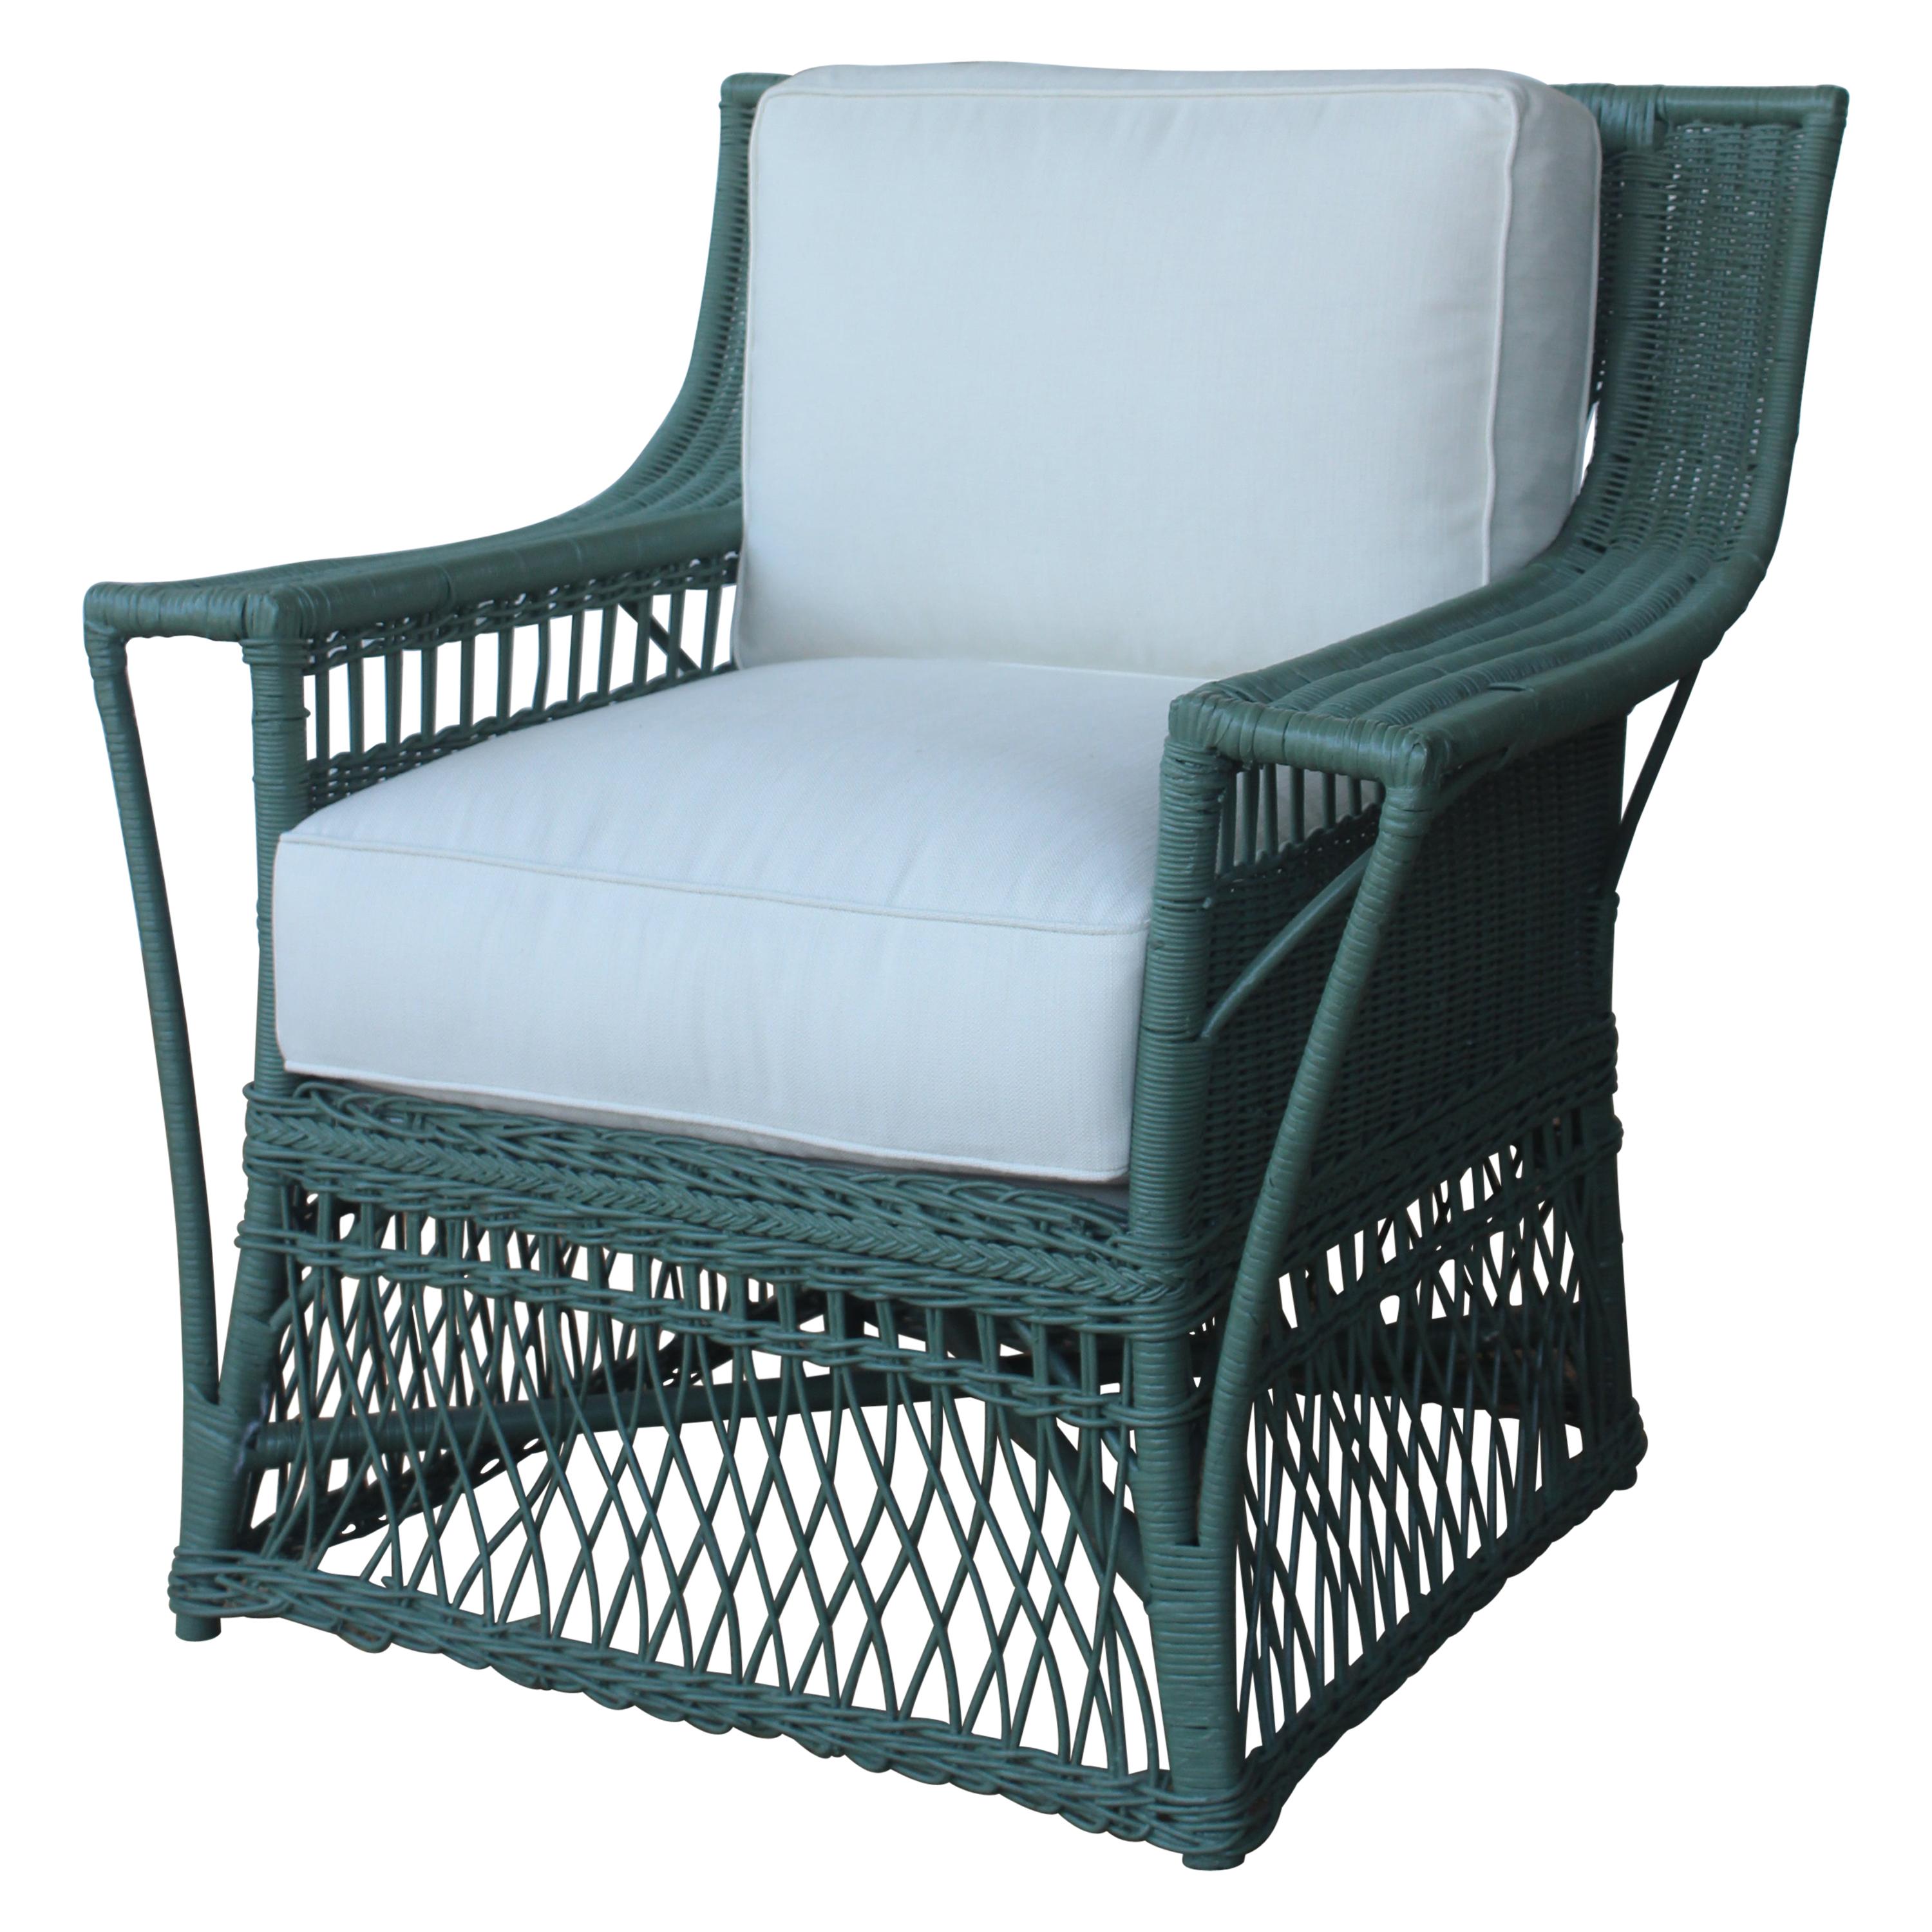 1930s American Wicker Lounge Chair